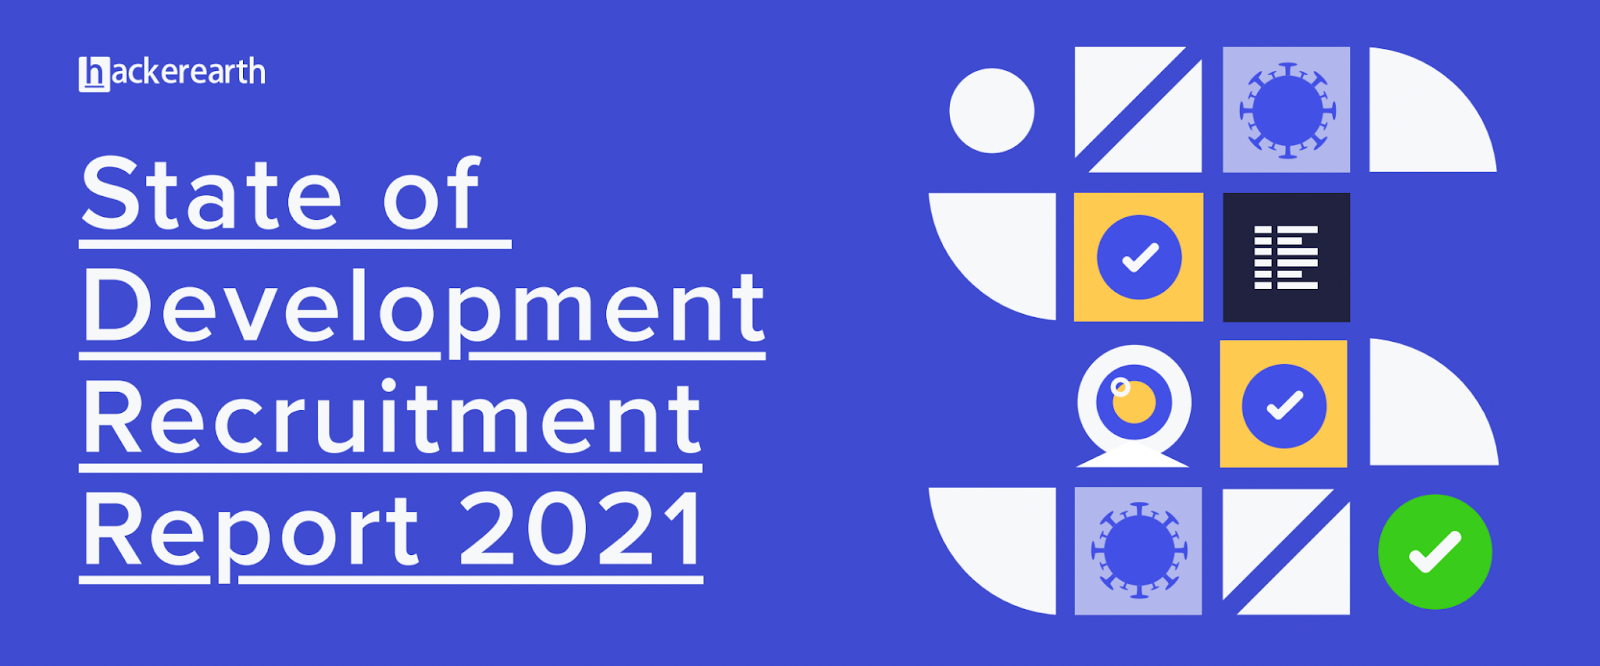 HackerEarth State of Development Recruitment Report 2021